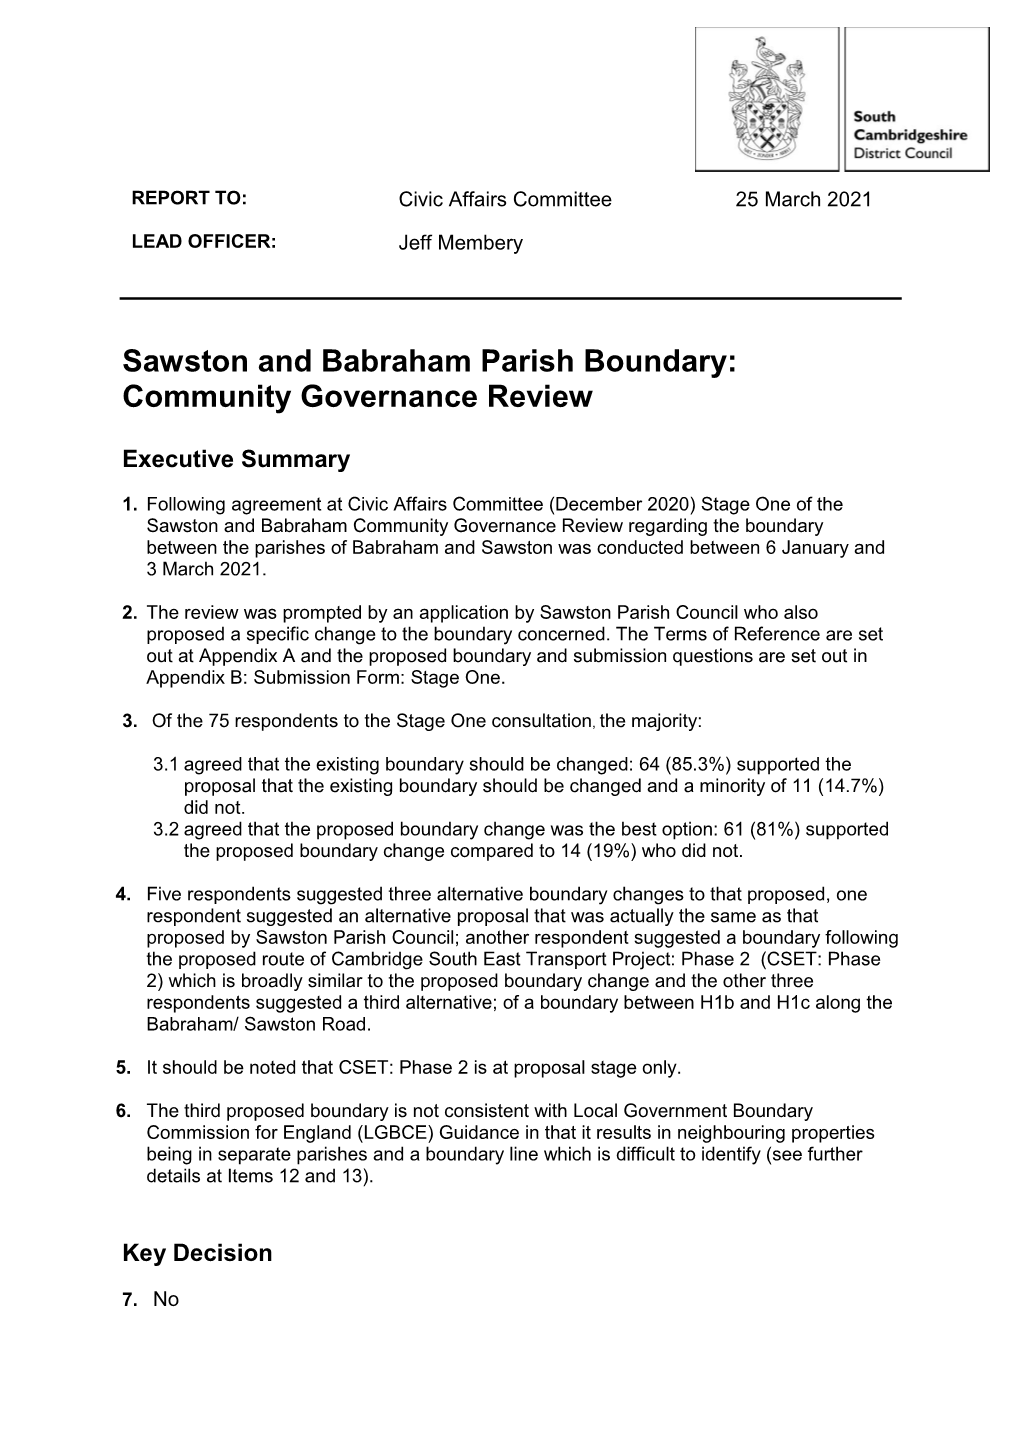 Sawston and Babraham Parish Boundary: Community Governance Review